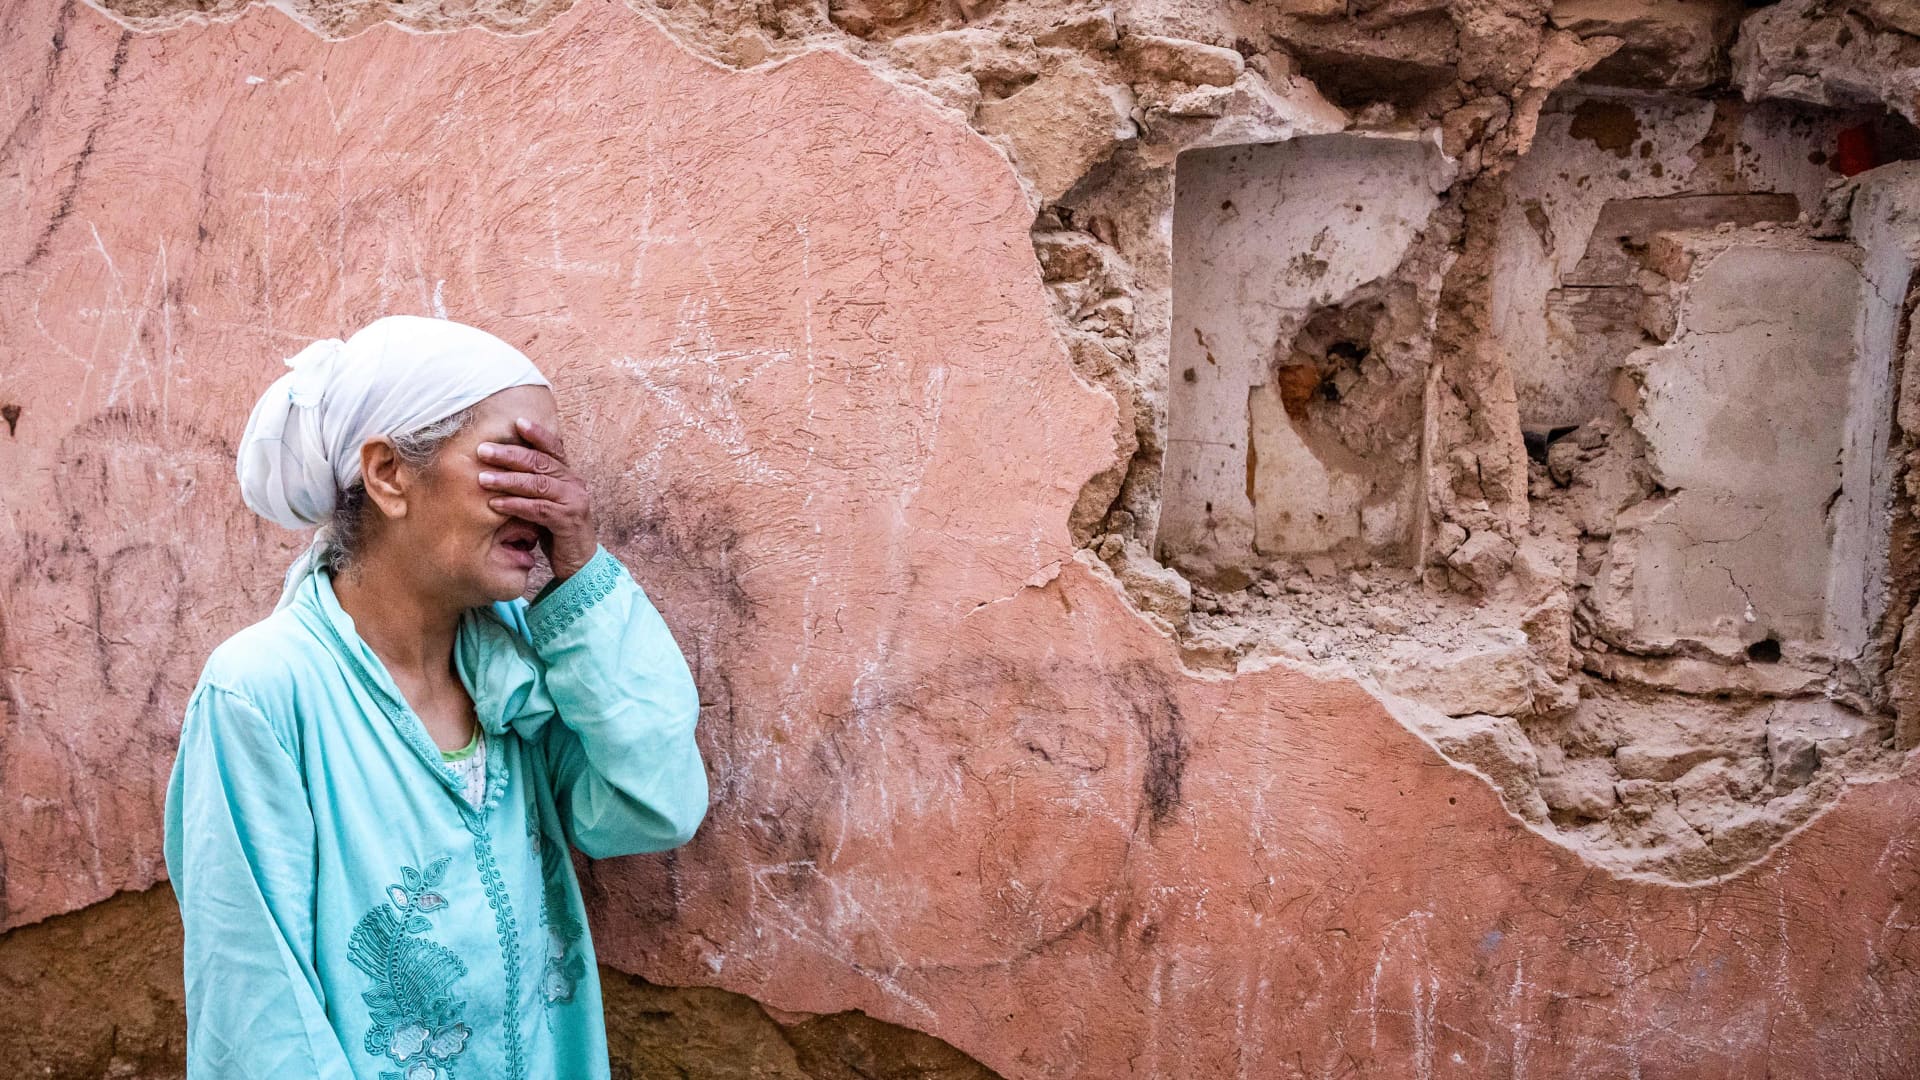 As Morocco reels from deadly quake, survivors seek aid